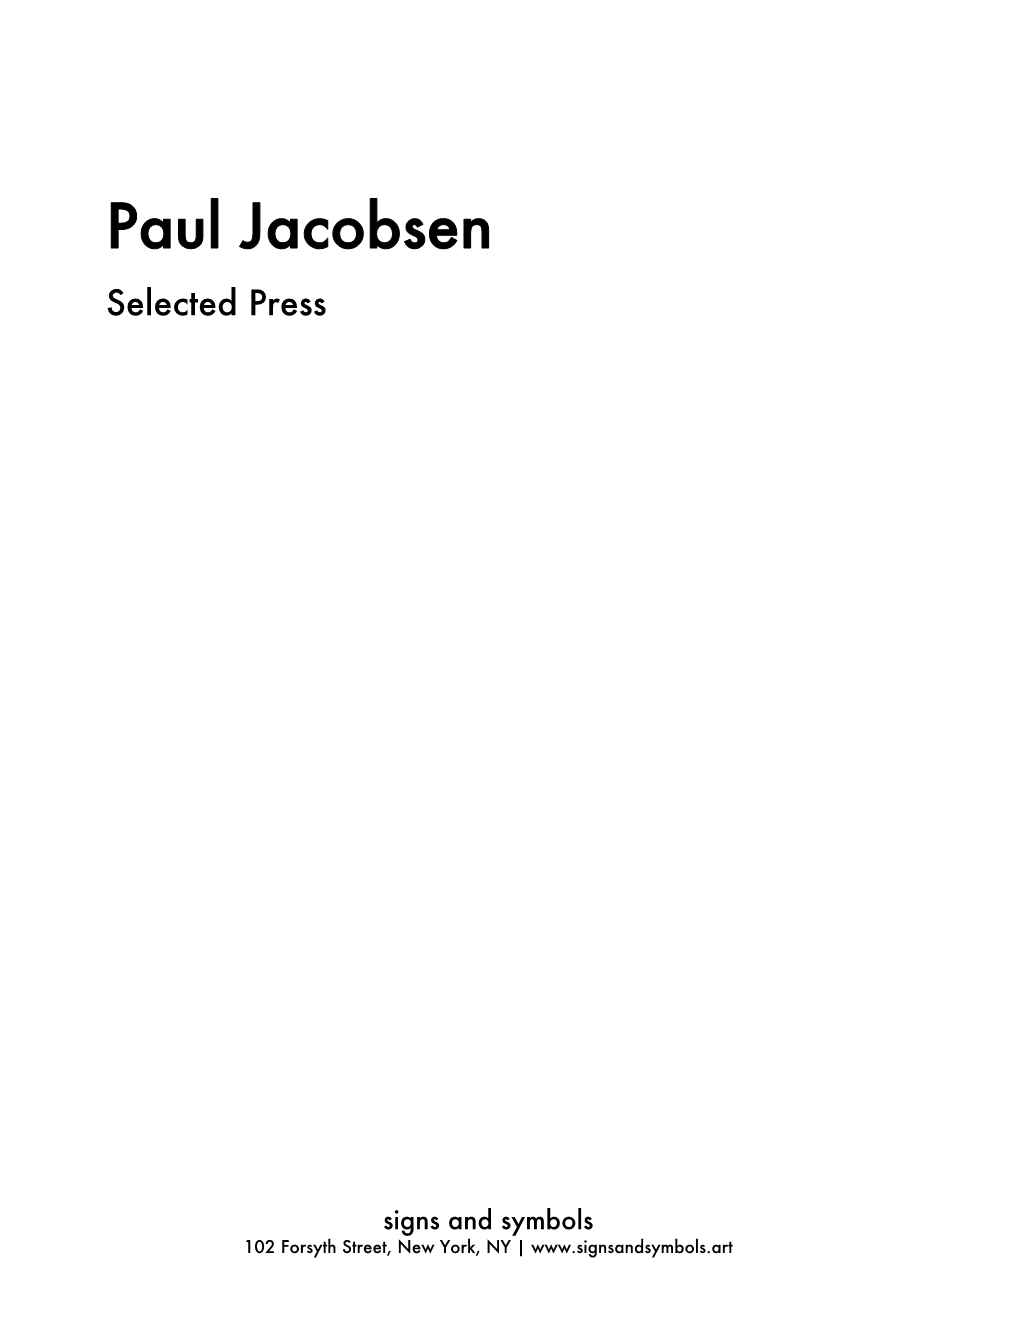 Paul Jacobsen Selected Press